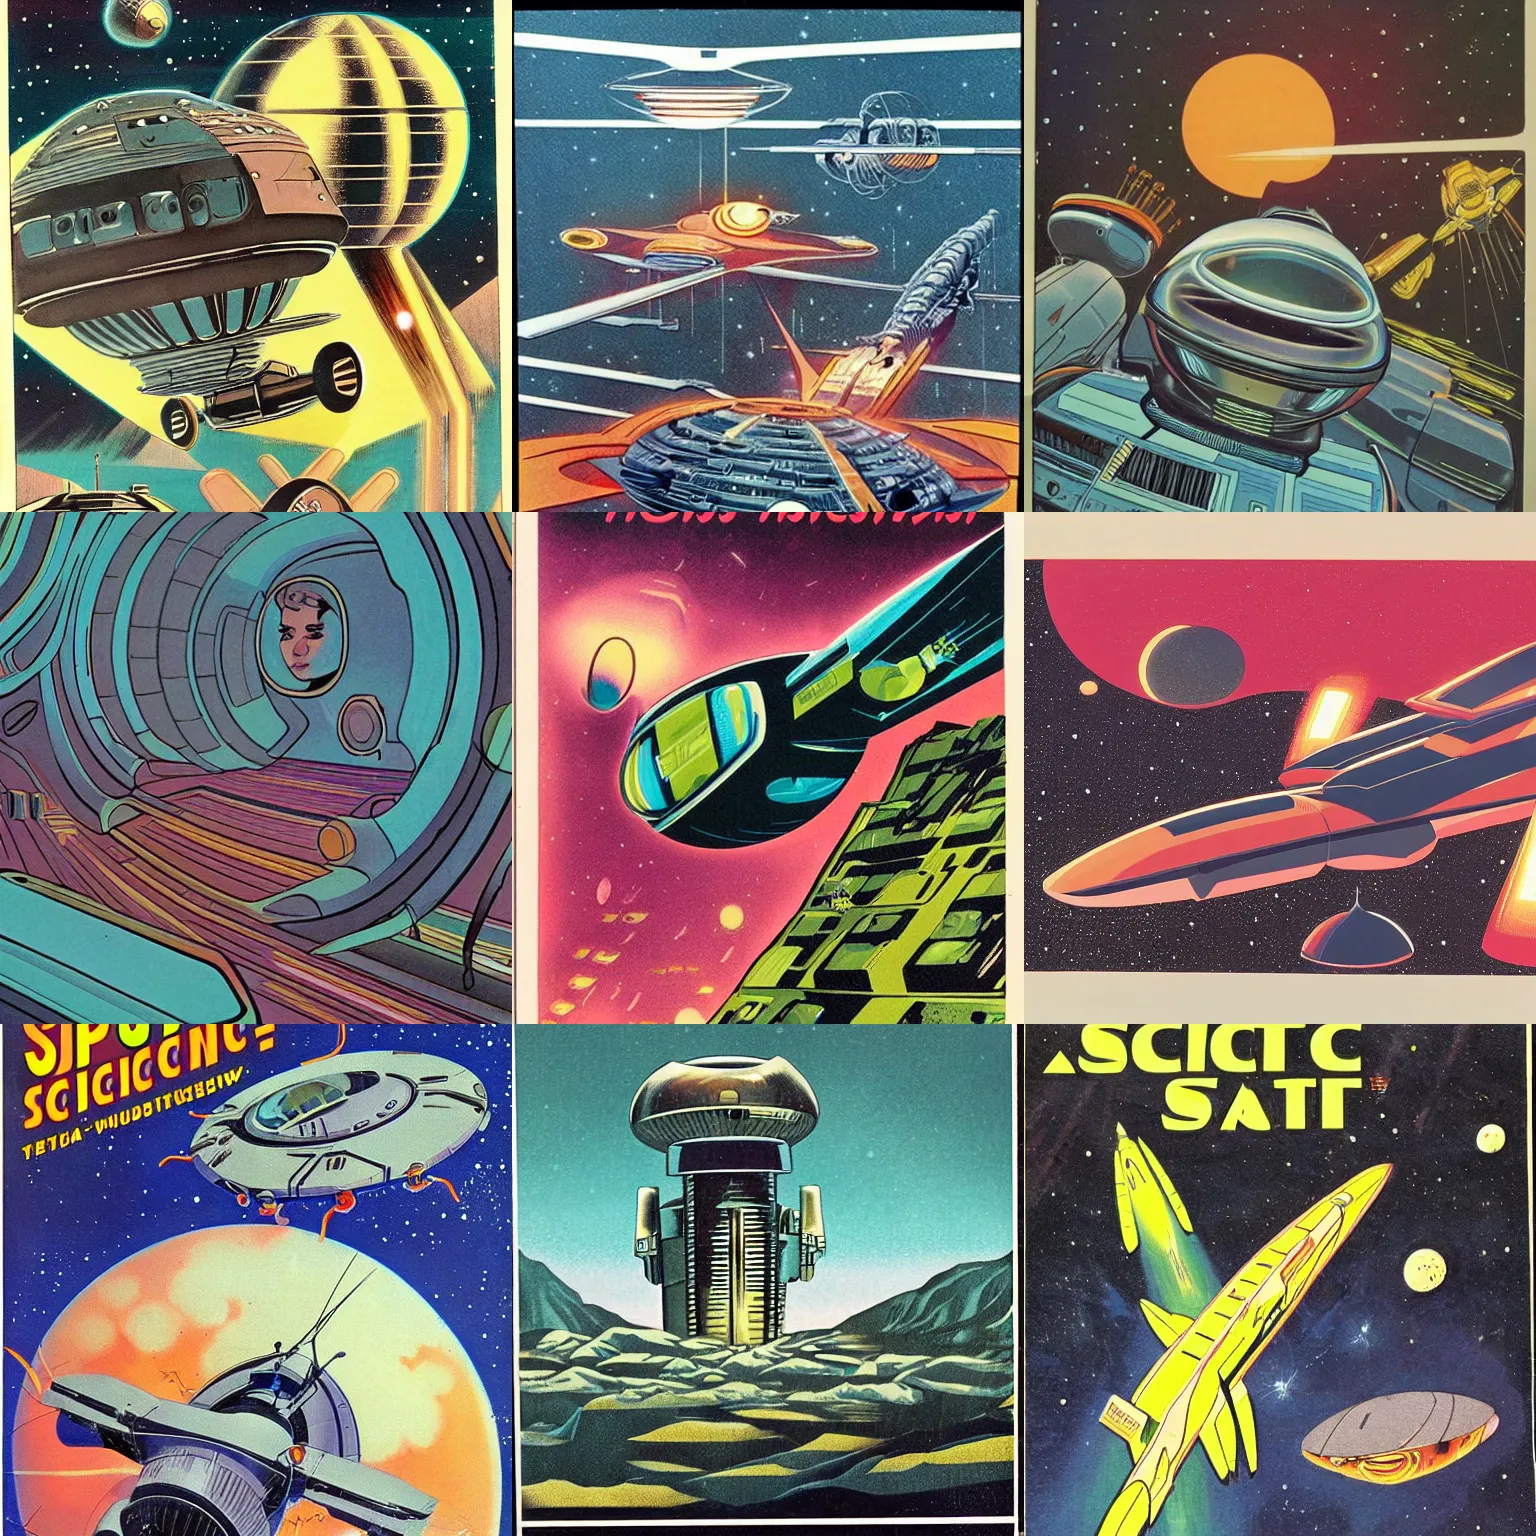 Prompt: a 1970s sci-fi illustration